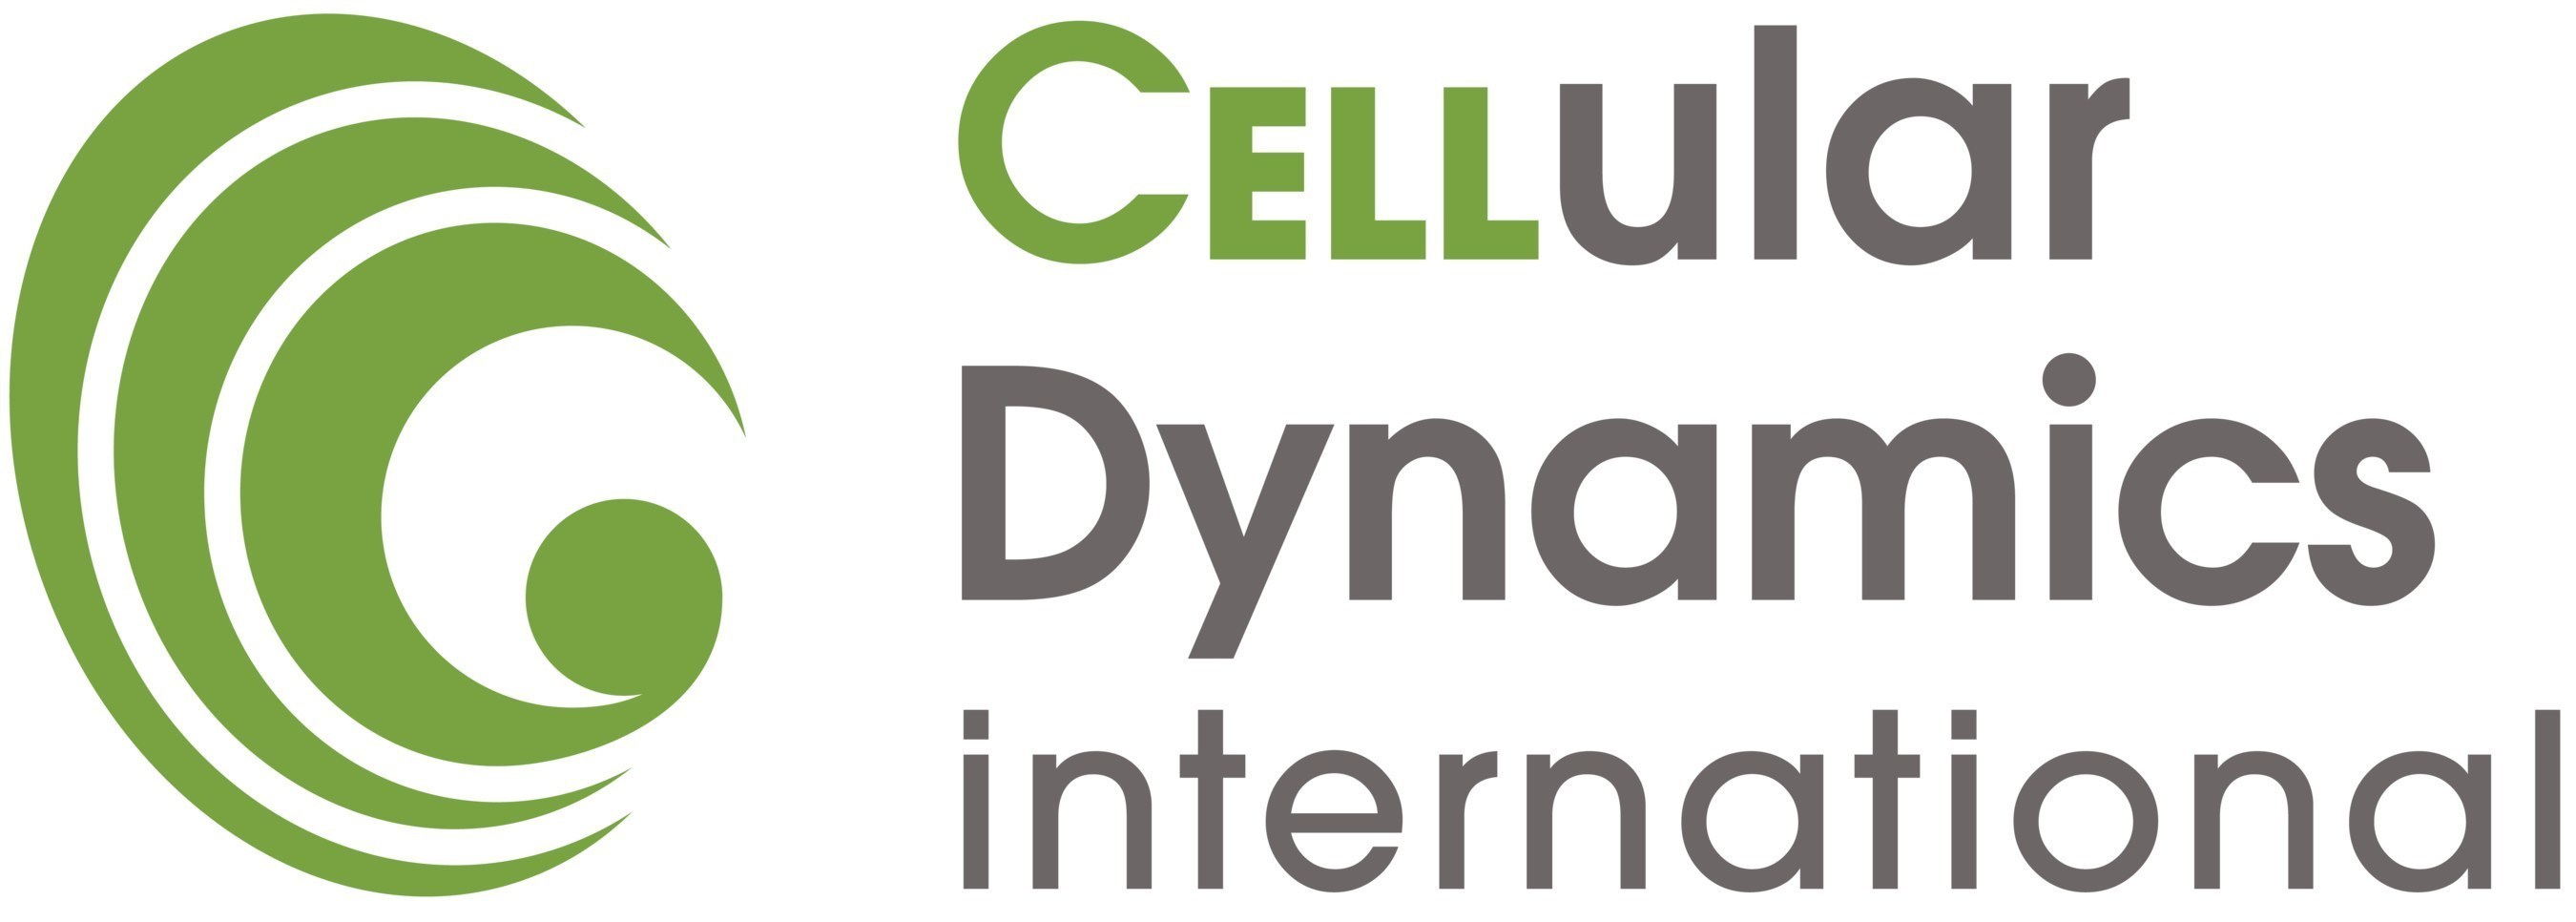 Cellular Dynamics, Inc. (www.cellulardynamics.com)